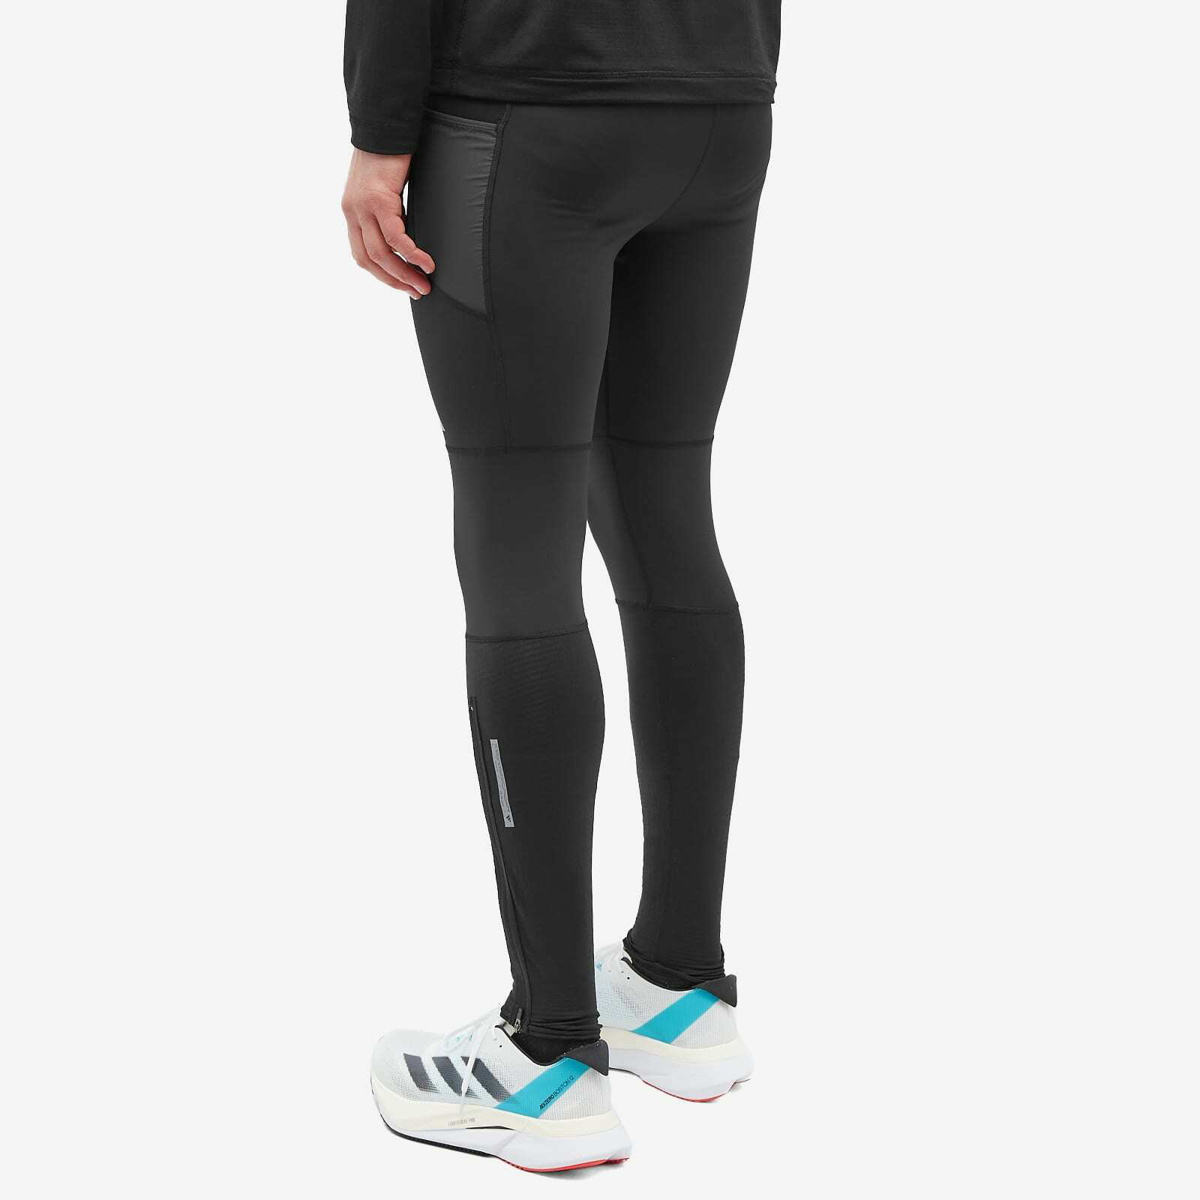 Adidas Ultimate CTE Warm Tight - Running leggings - Men's